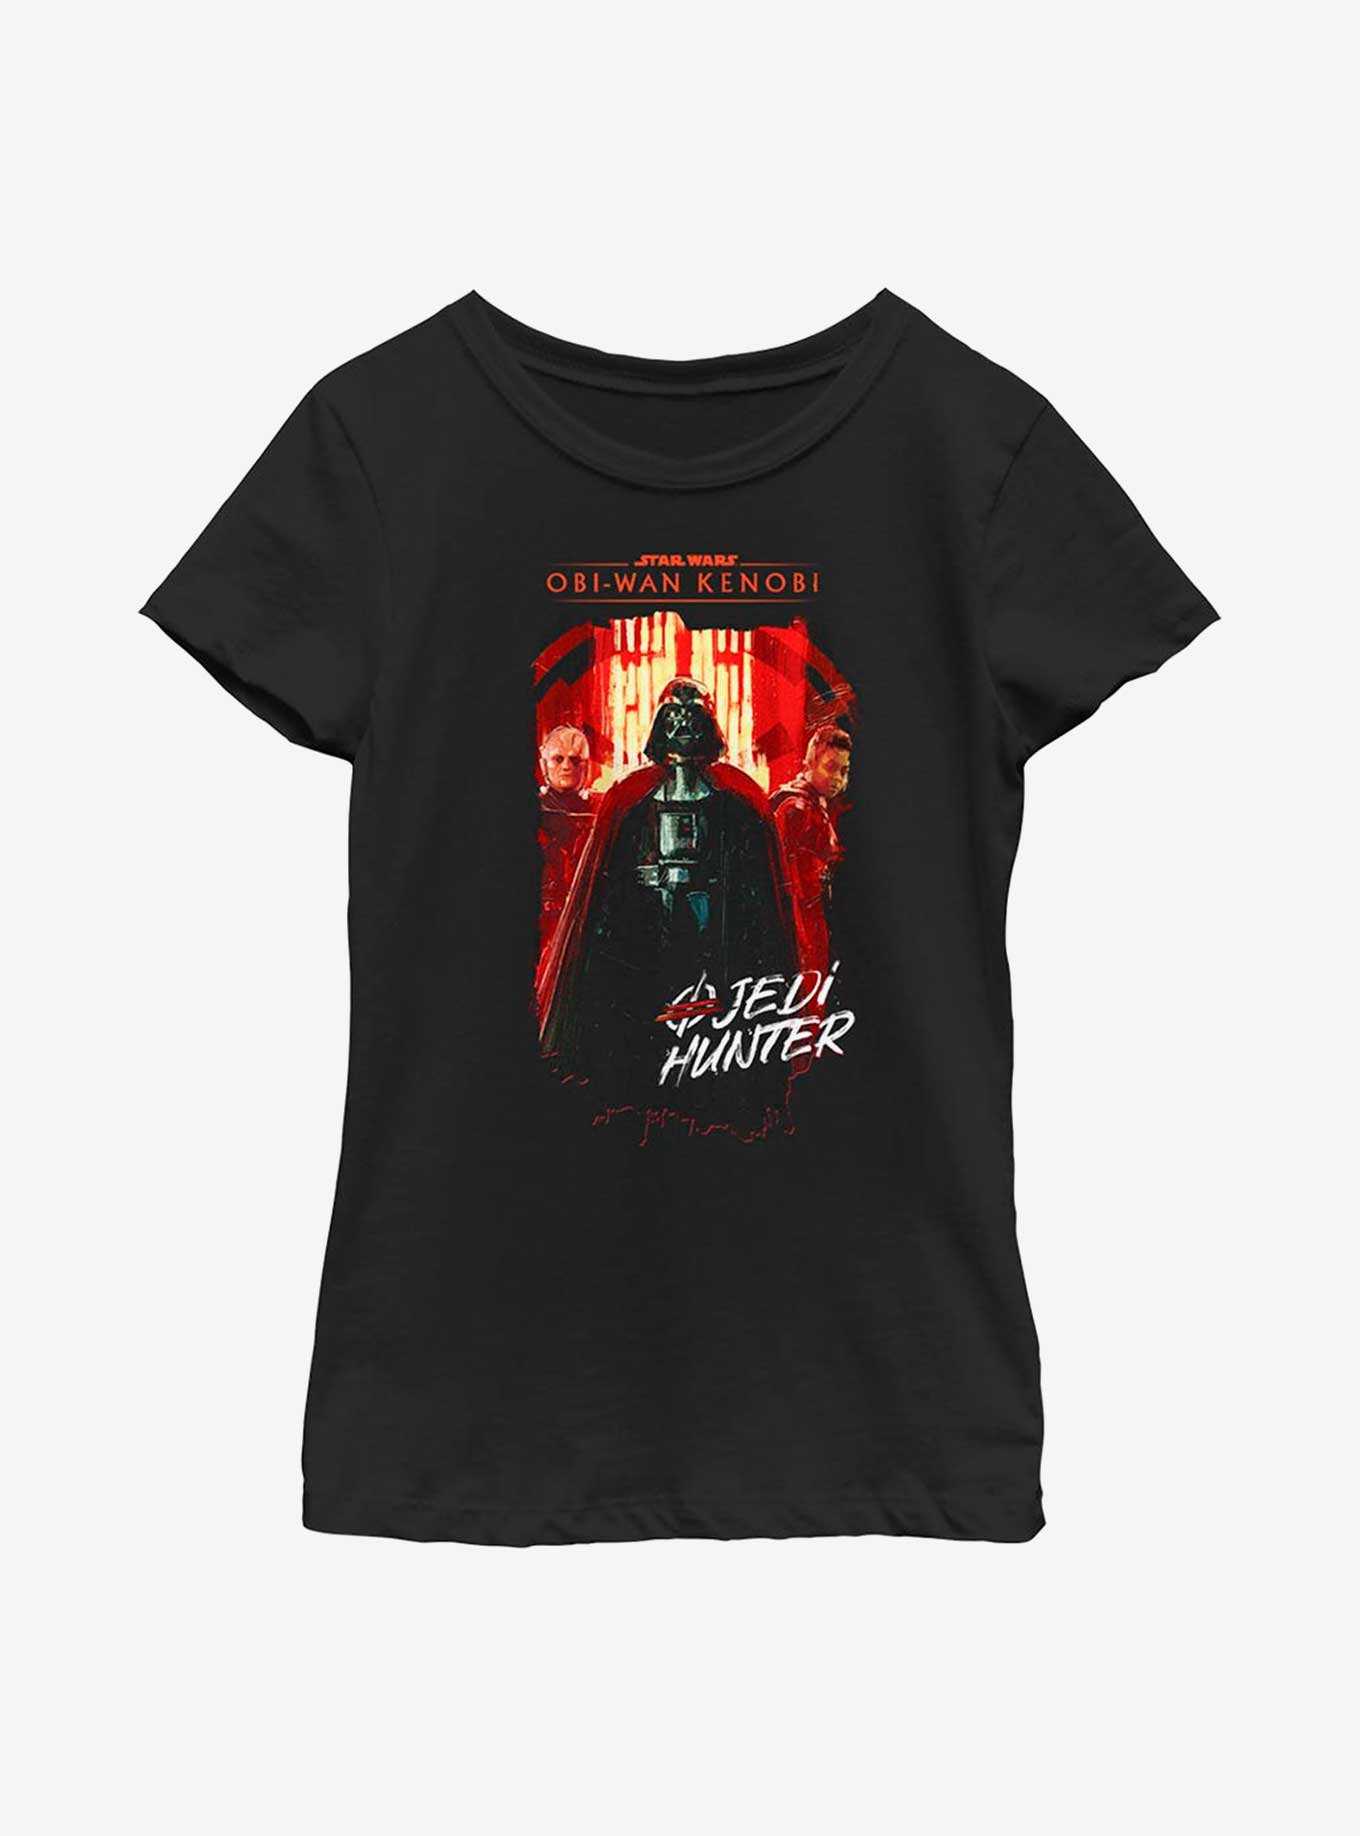 Star Wars Obi-Wan Kenobi Jedi Hunter Darth Vader And Inquistors Youth Girls T-Shirt, , hi-res